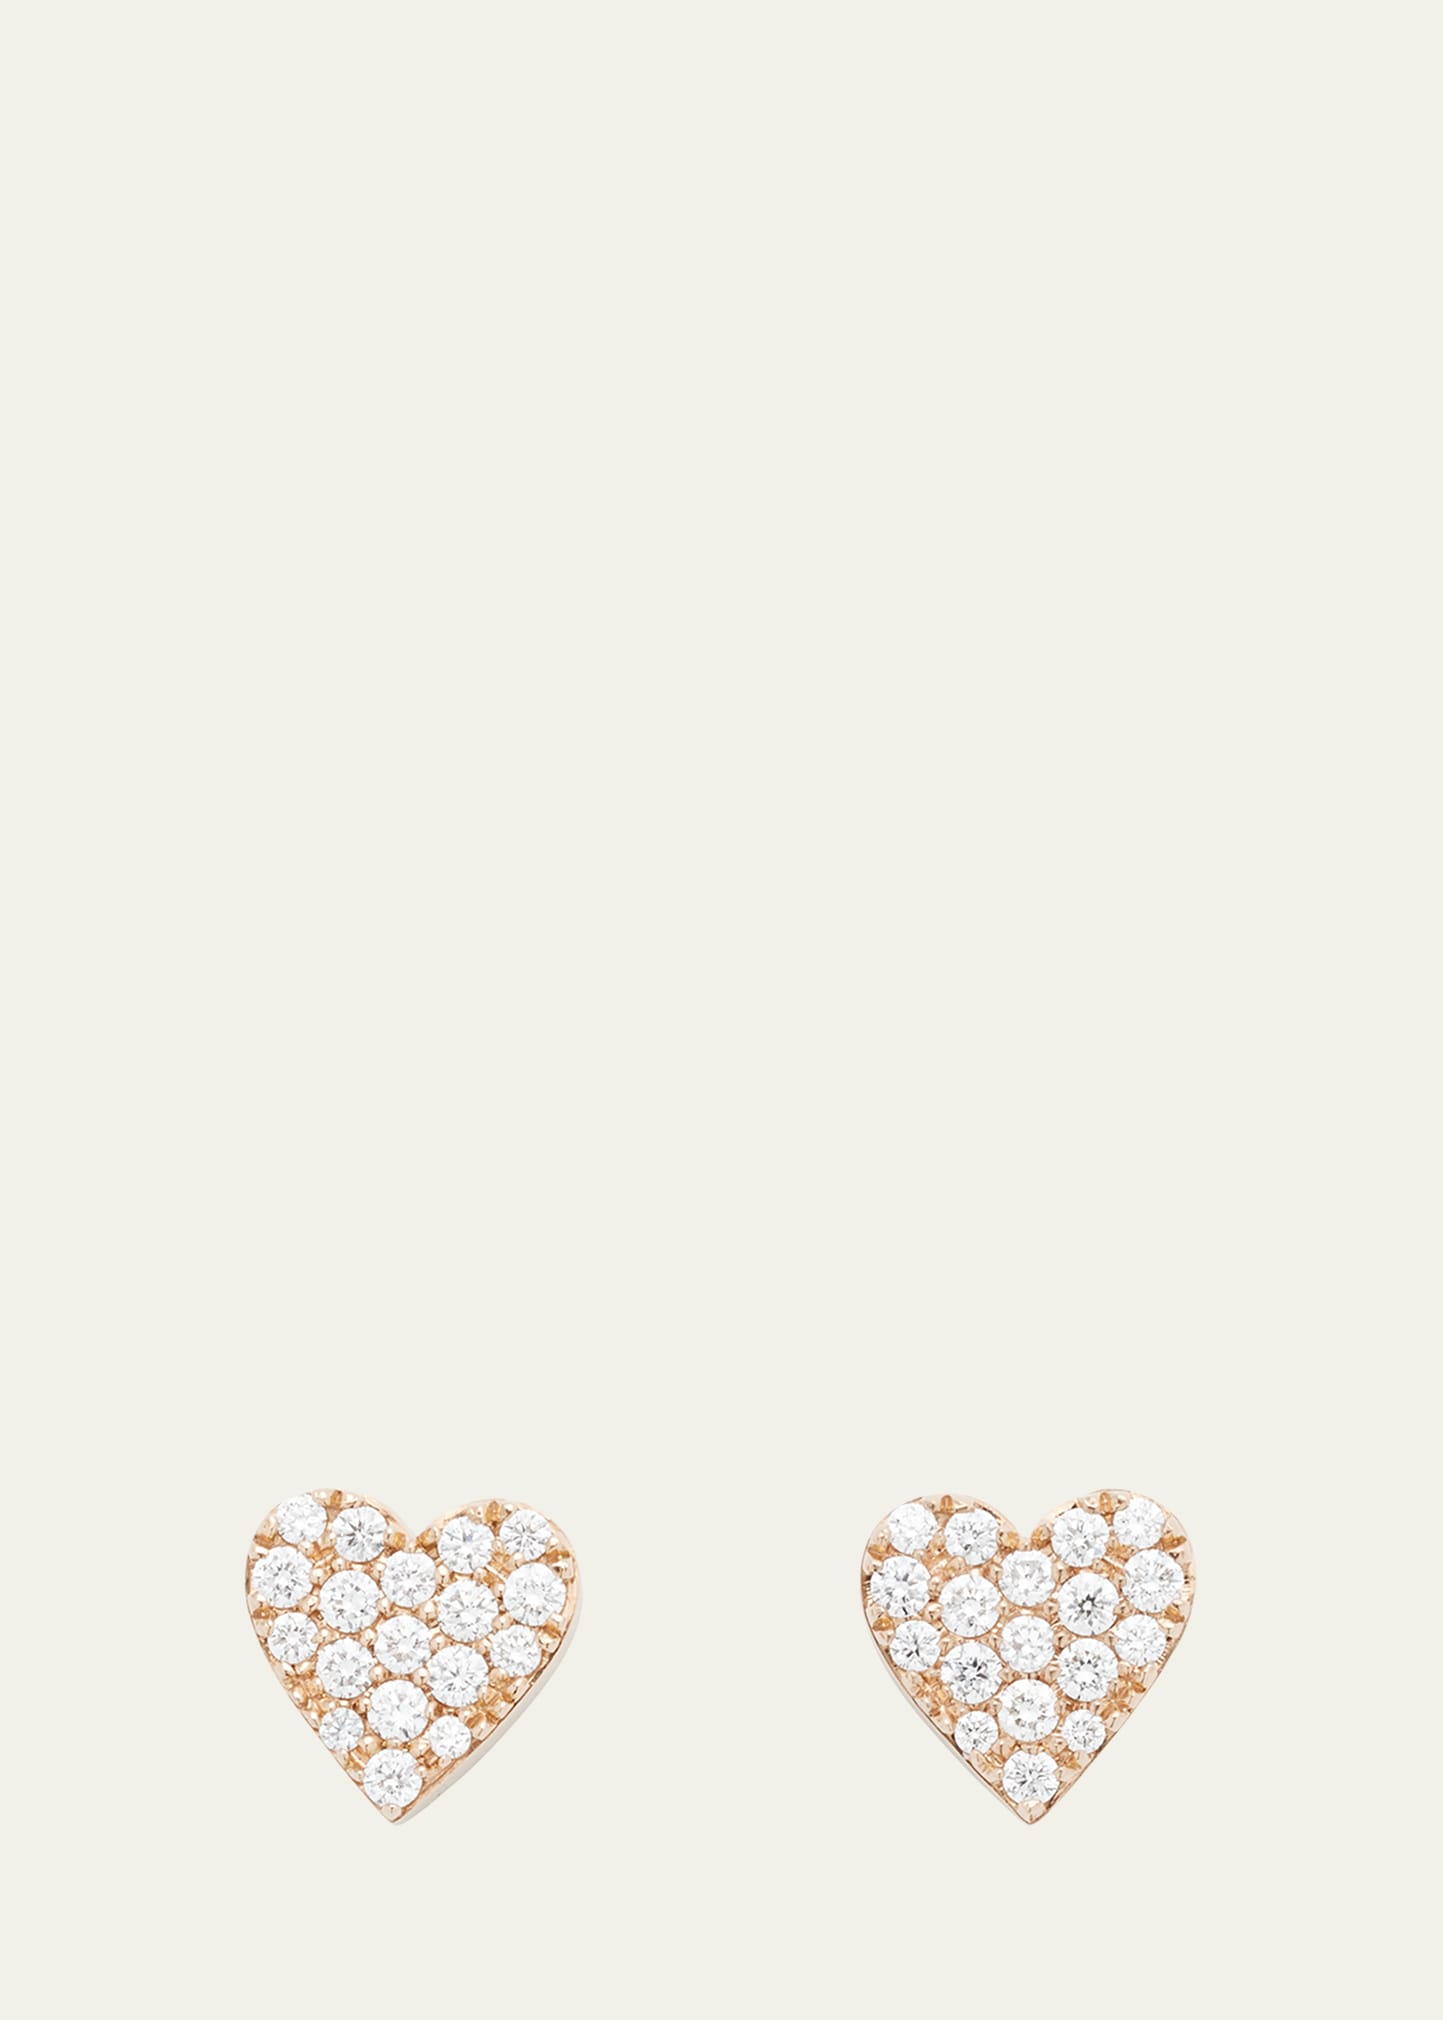 CADAR 18K Rose Gold Heart Stud Earrings with Diamonds